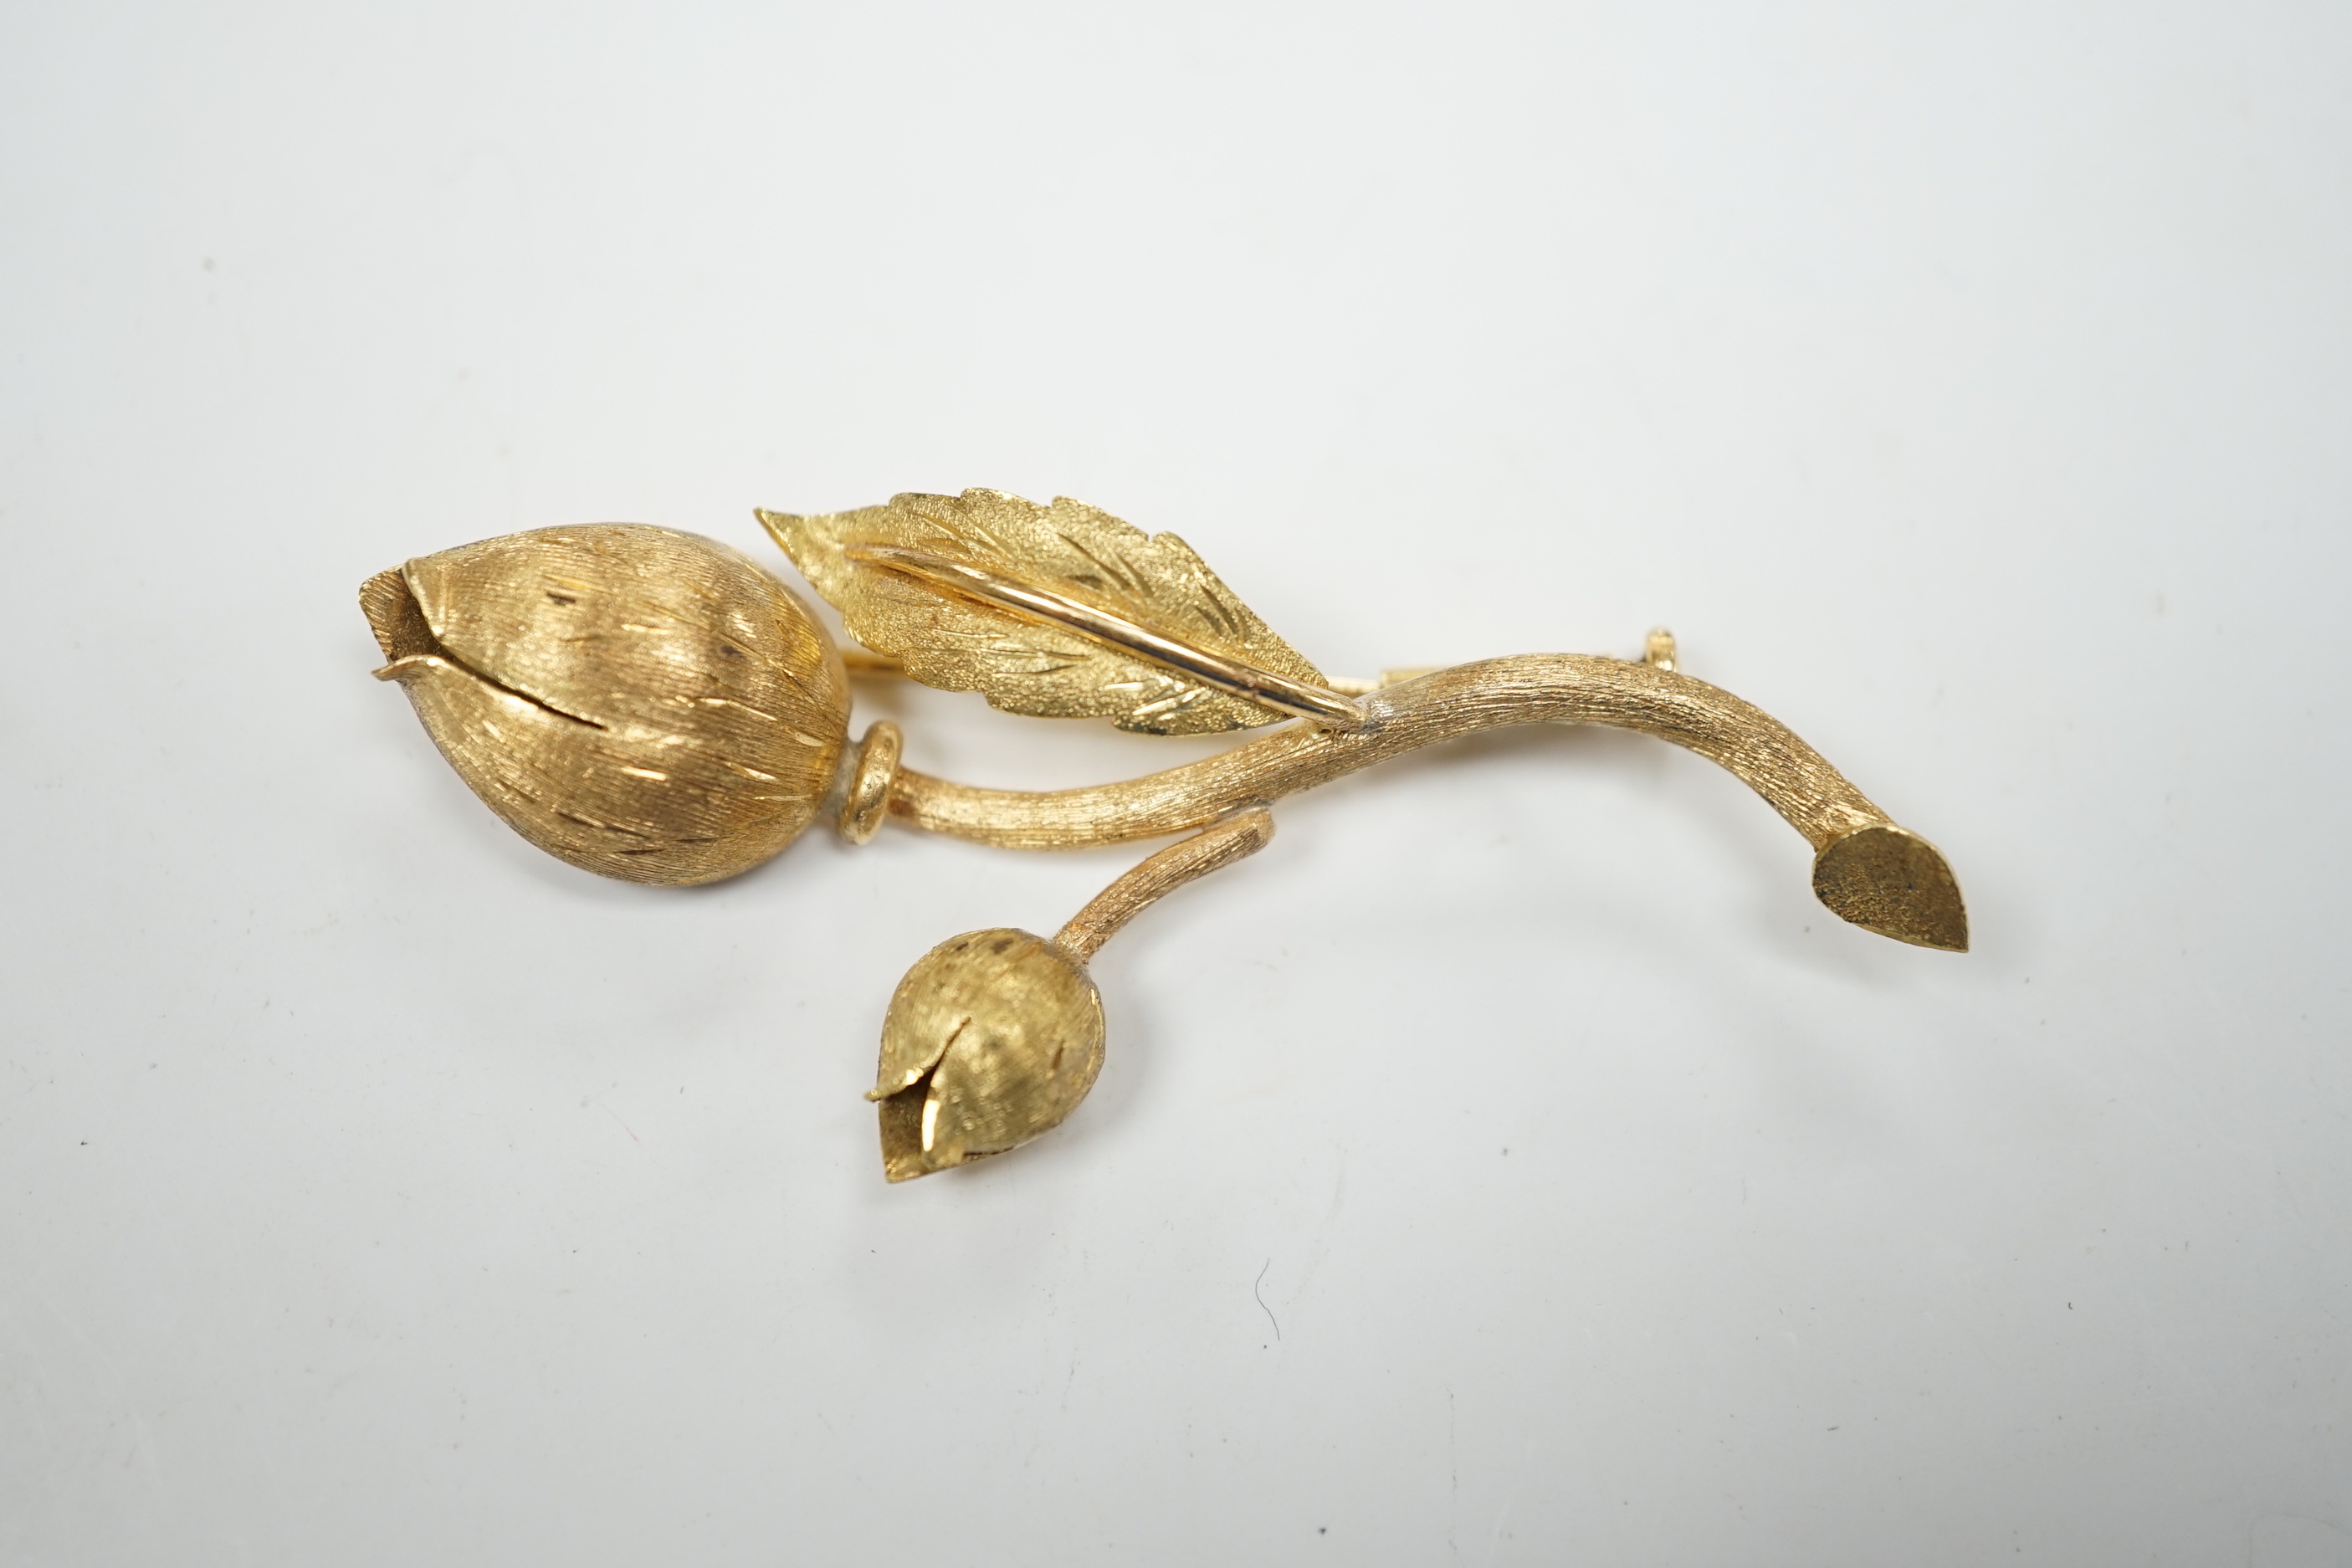 A textured yellow metal flower bud brooch, 60mm, 10.5 grams.